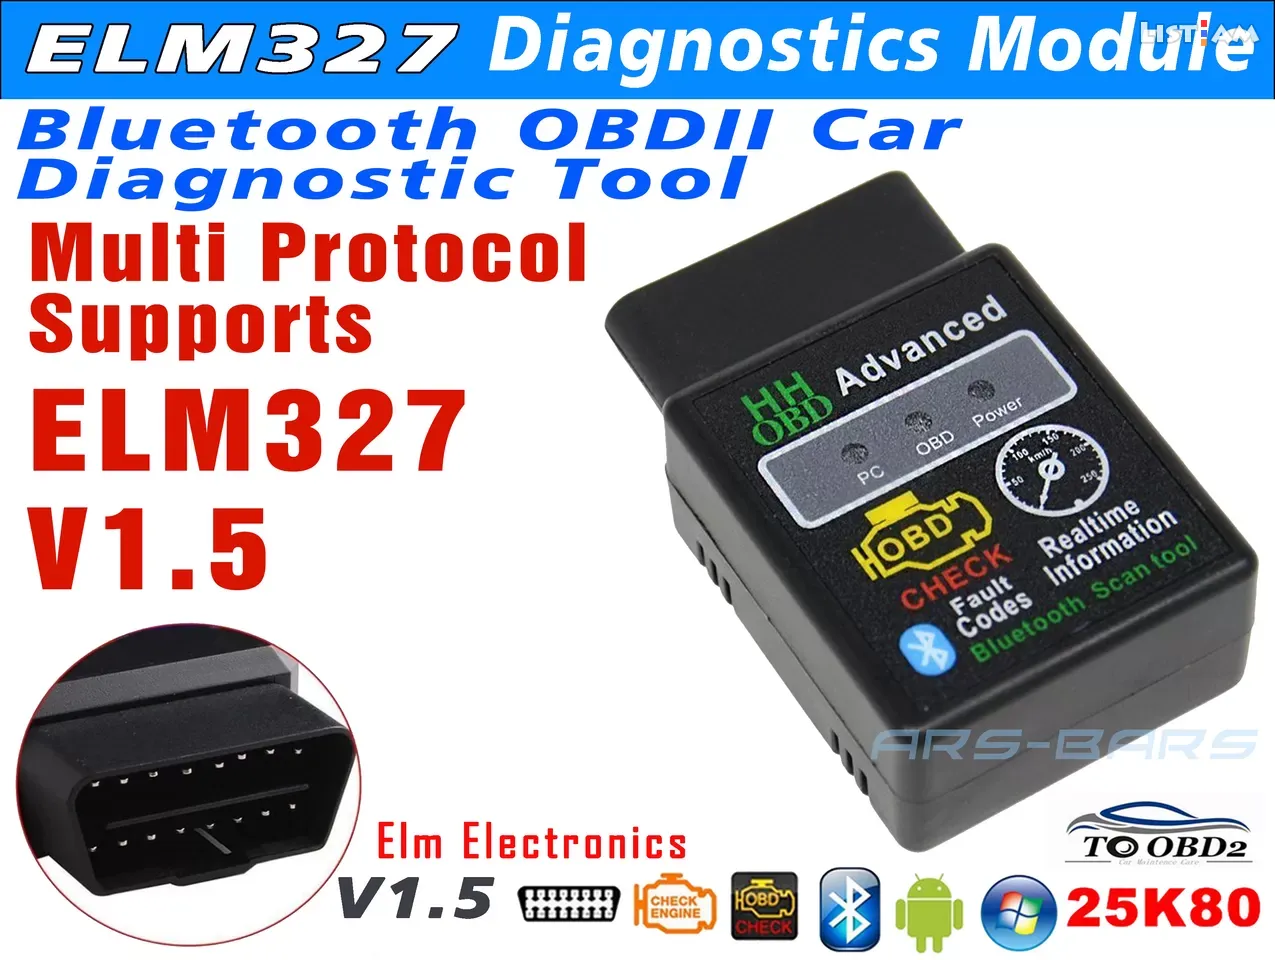 ELM327 Bluetooth Pro v1.5 OBD II Obd2 CAN BUS ELM-327 Адаптер (Cod: AB0529)  - Все остальное в электронике 